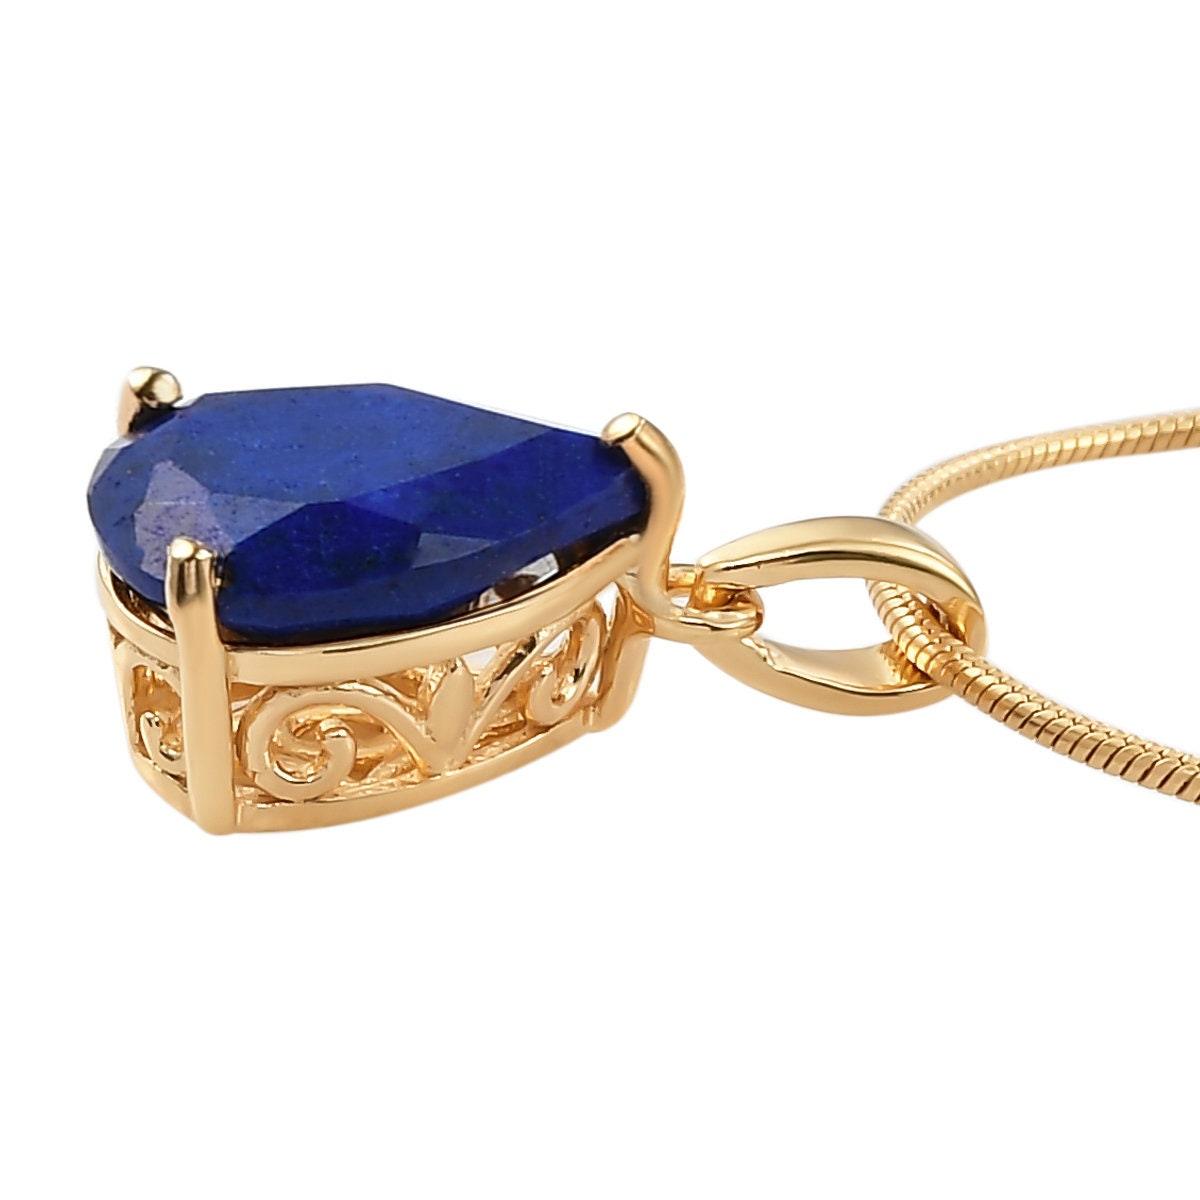 Lapis Lazuli Pendant, Lapis Teardrop Solitaire Pendant, September Birthstone Necklace, 925 Sterling Silver, Lapis Gold Necklace, Gift - Inspiring Jewellery